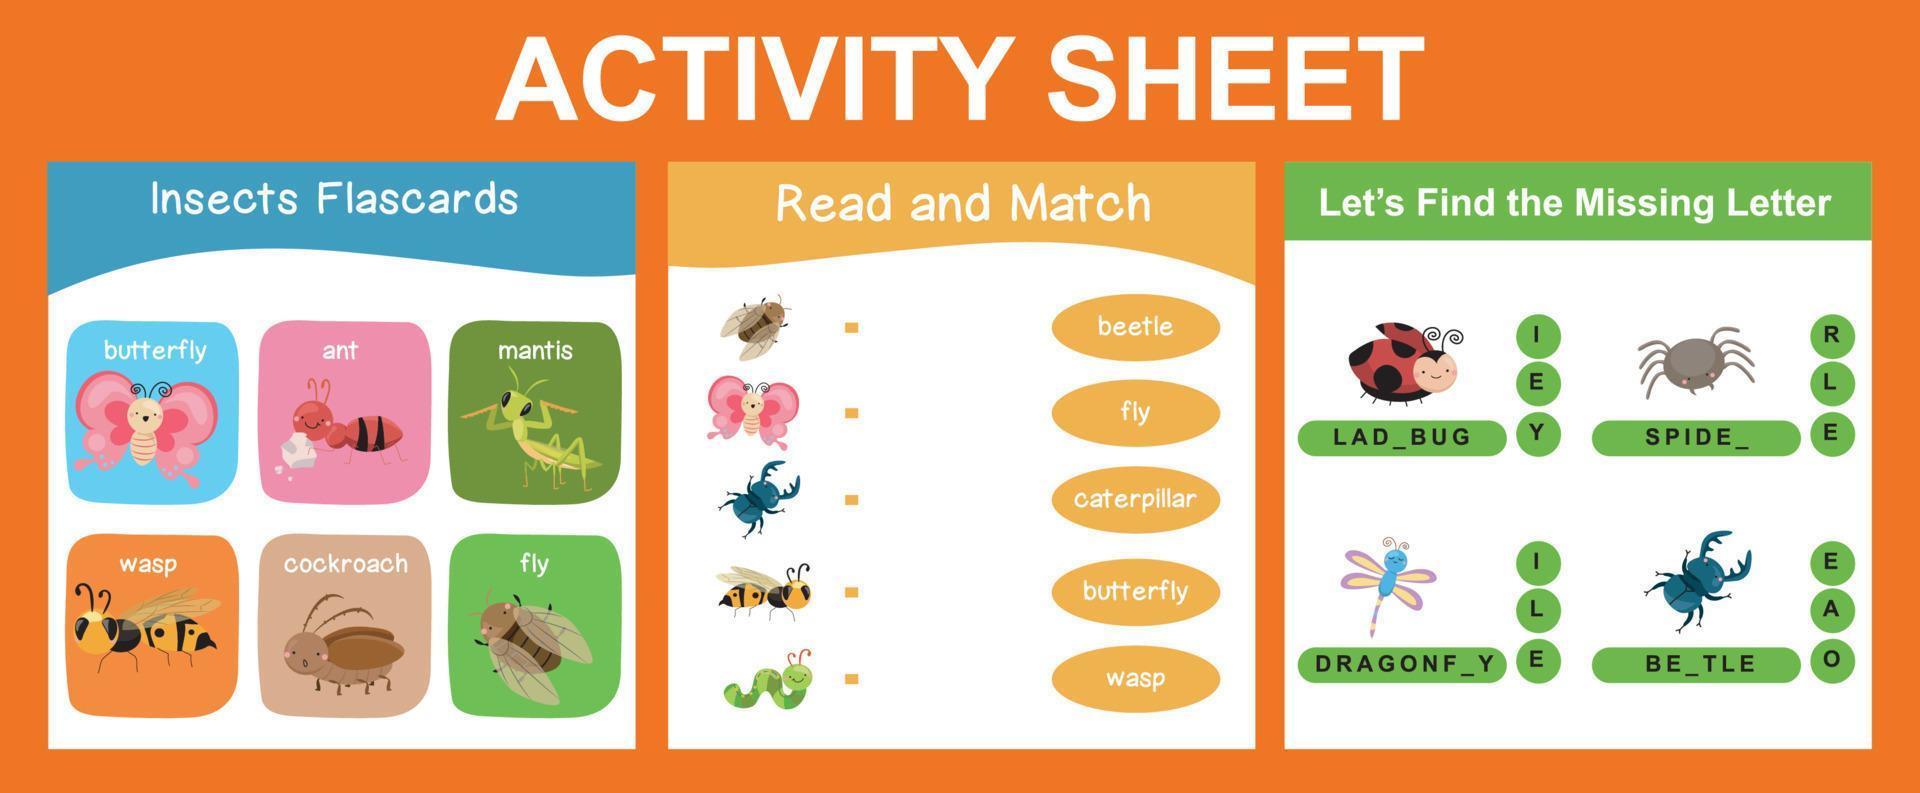 3 in 1 Activity sheet for children. Educational printable worksheet. Vector illustrations.